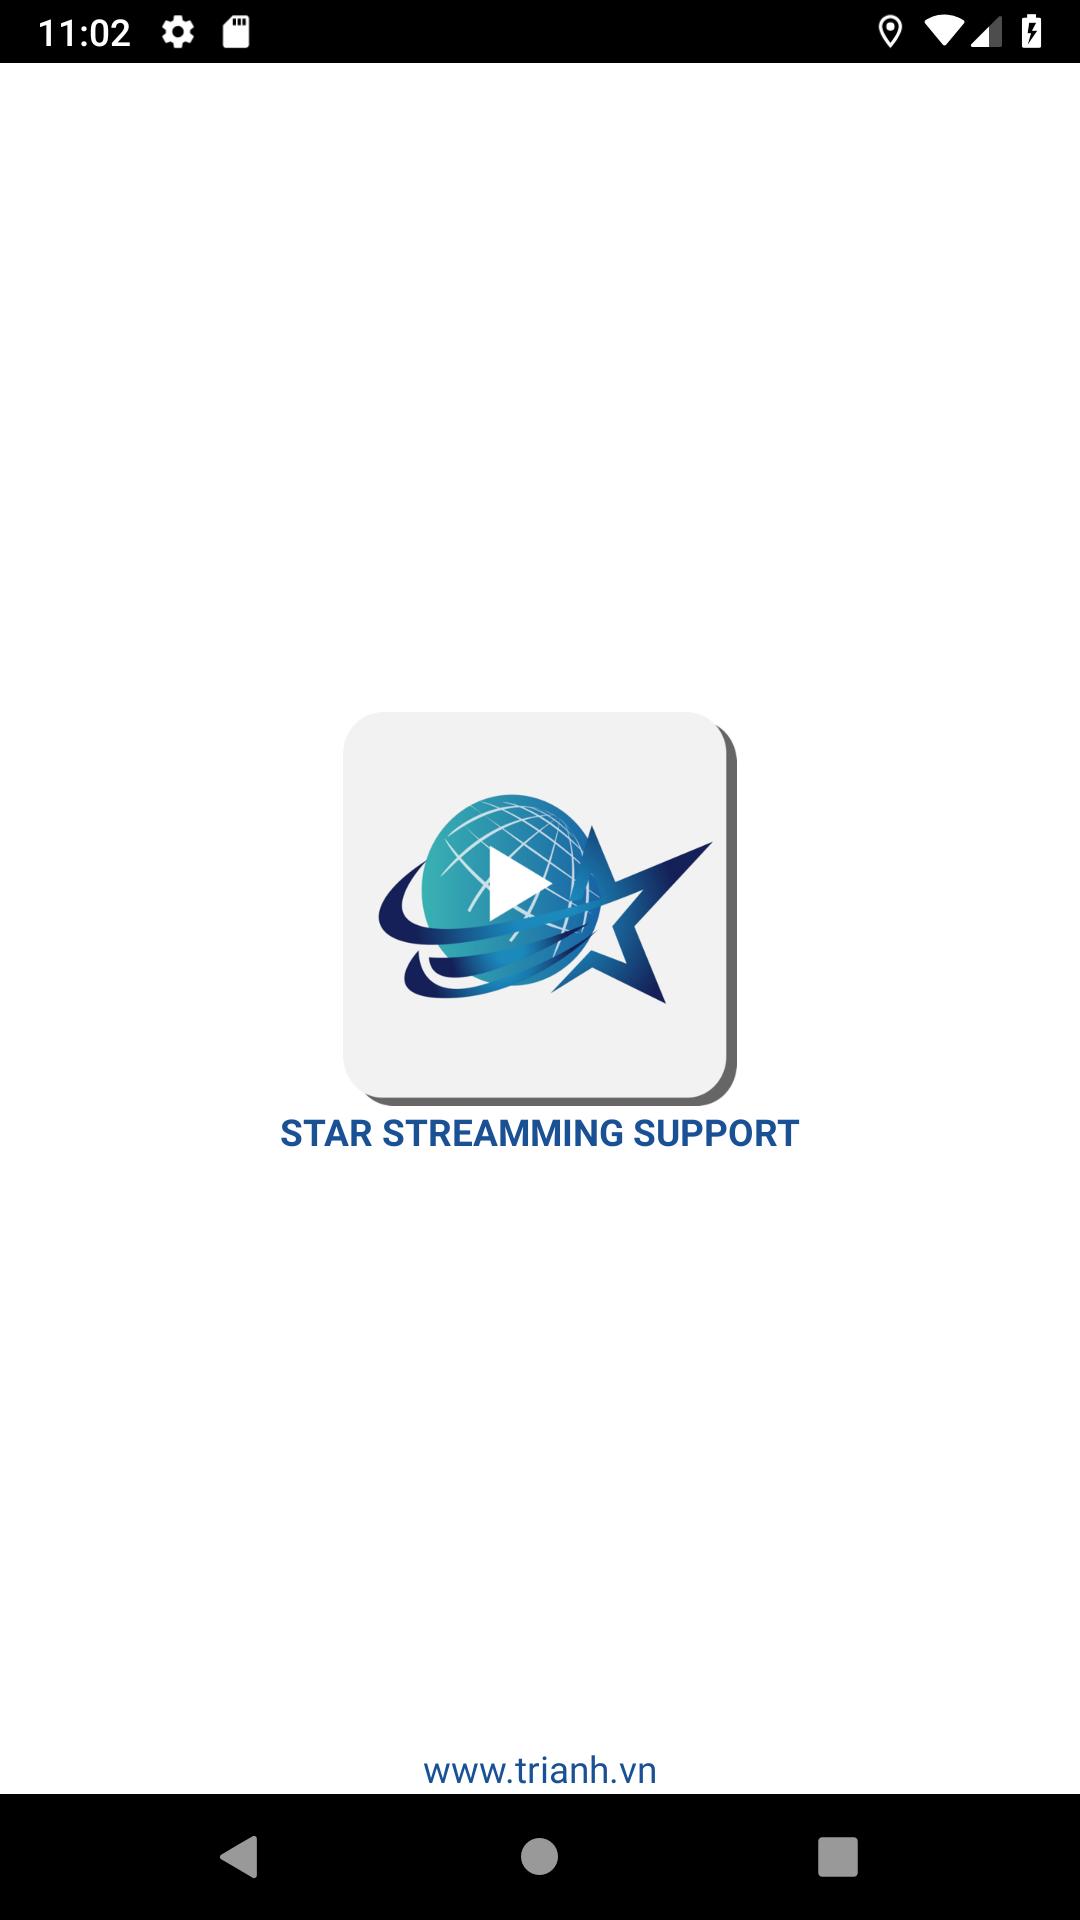 Stream support